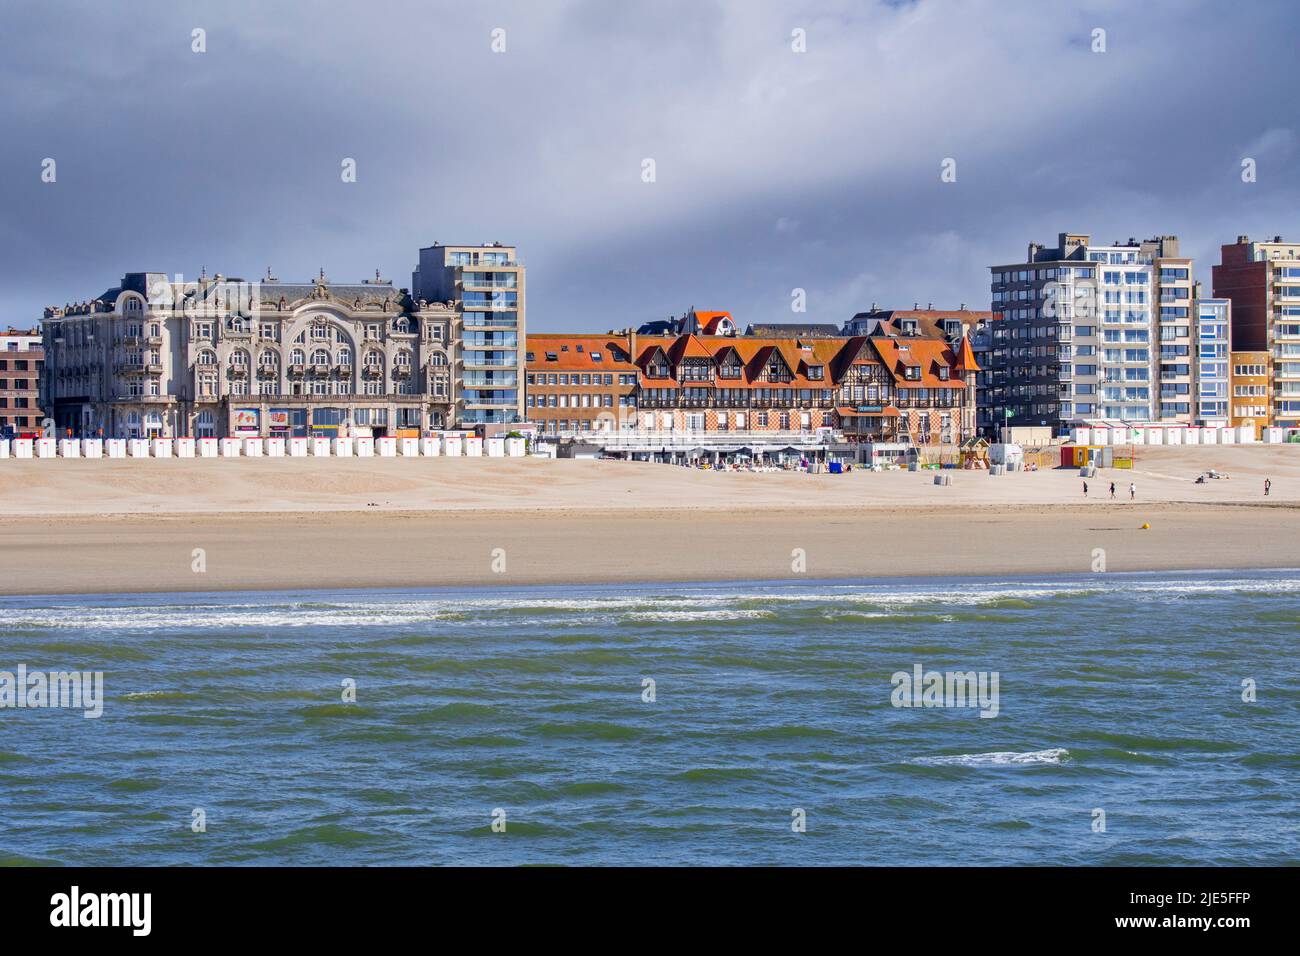 Skyline showing flats and apartments on promenade at Nieuport / Nieuwpoort, seaside resort along the North Sea coast, West Flanders, Belgium Stock Photo